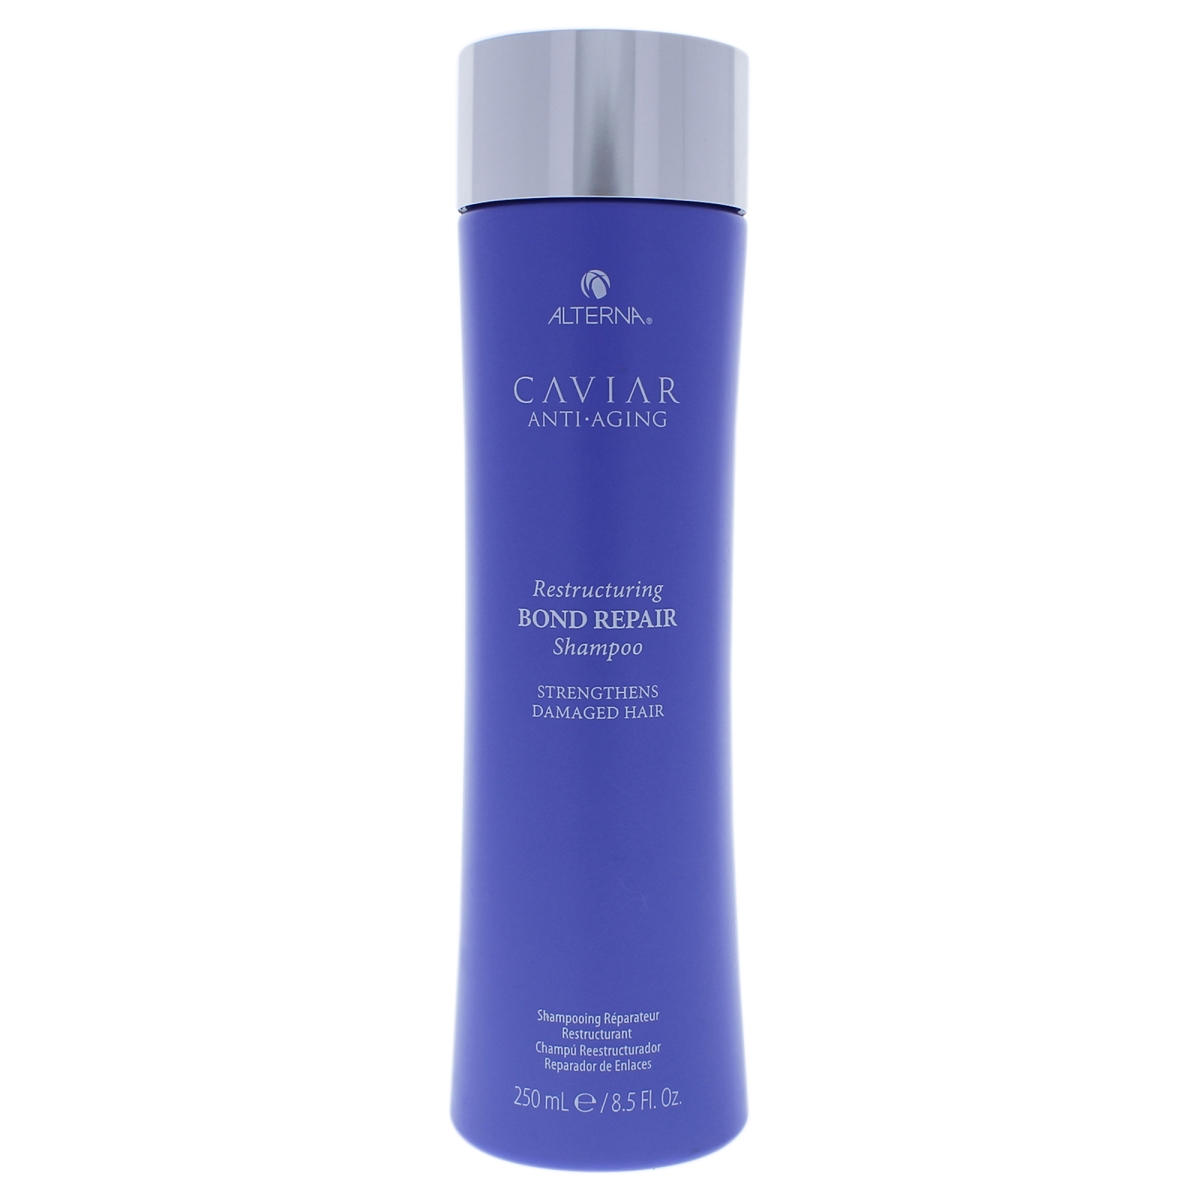 I0087683 8.45 Oz Caviar Anti-aging Restructuring Bond Repair Shampoo For Unisex